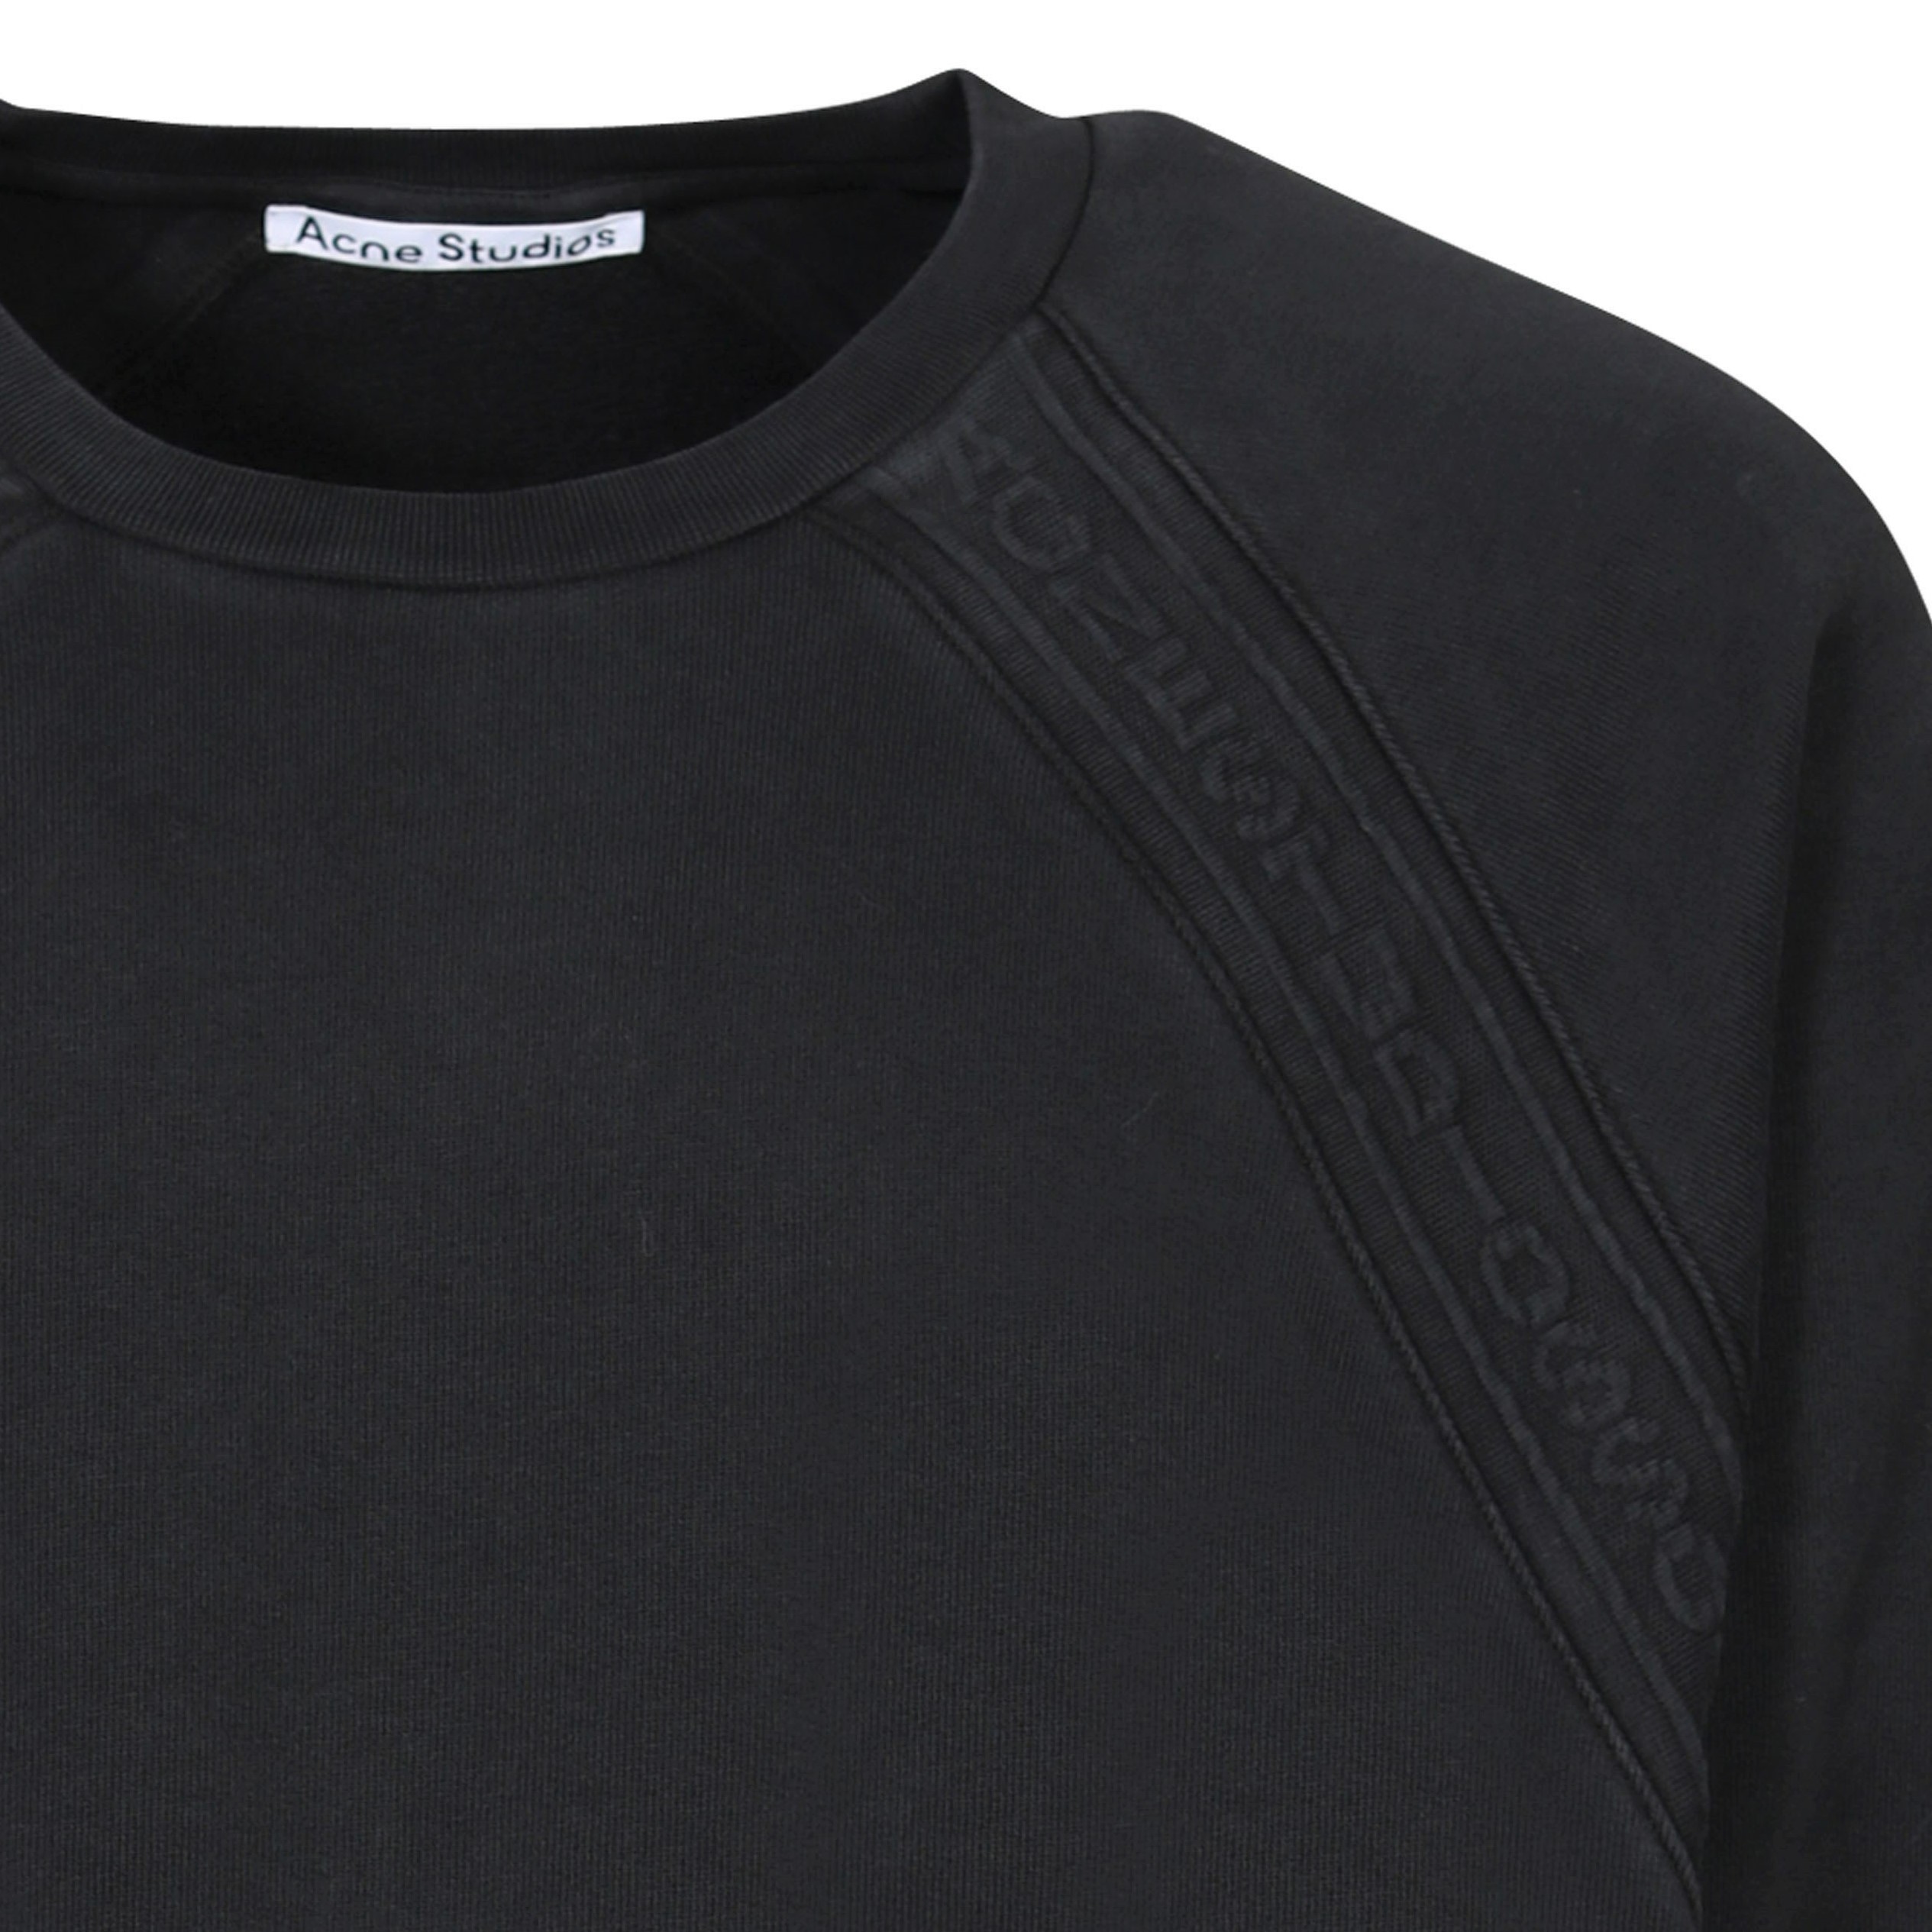 Acne Studios Logo Sweatshirt in Black L